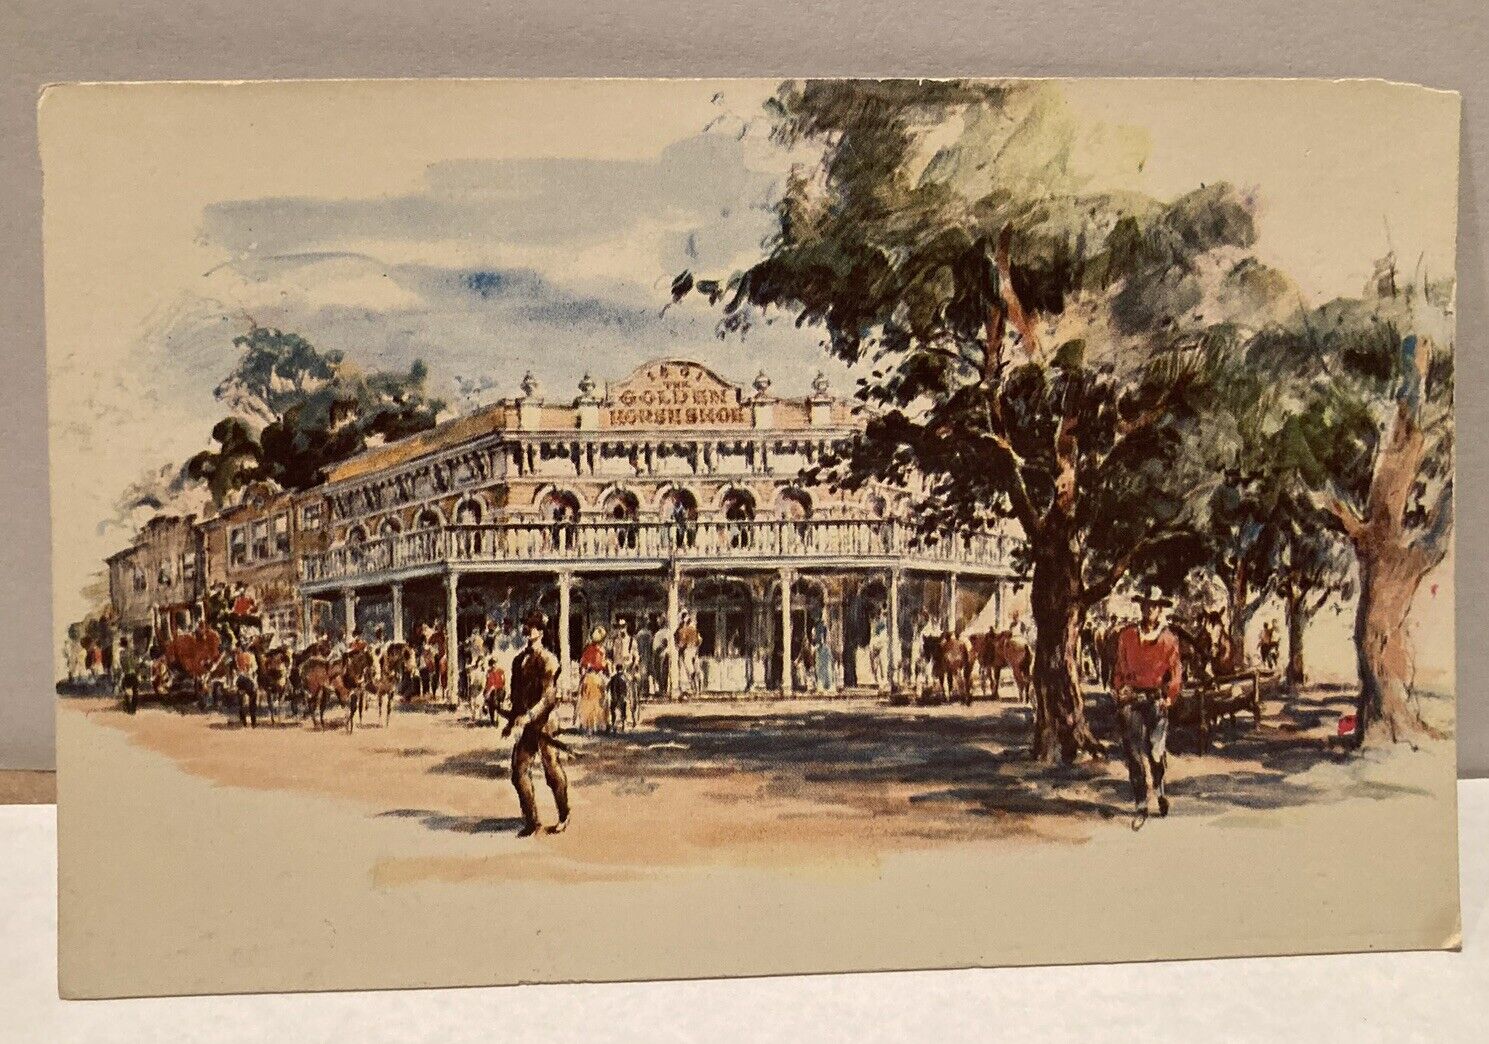 Rare Disneyland 1955 Illustrated Frontierland “Park Your Guns Cowboy” Postcard